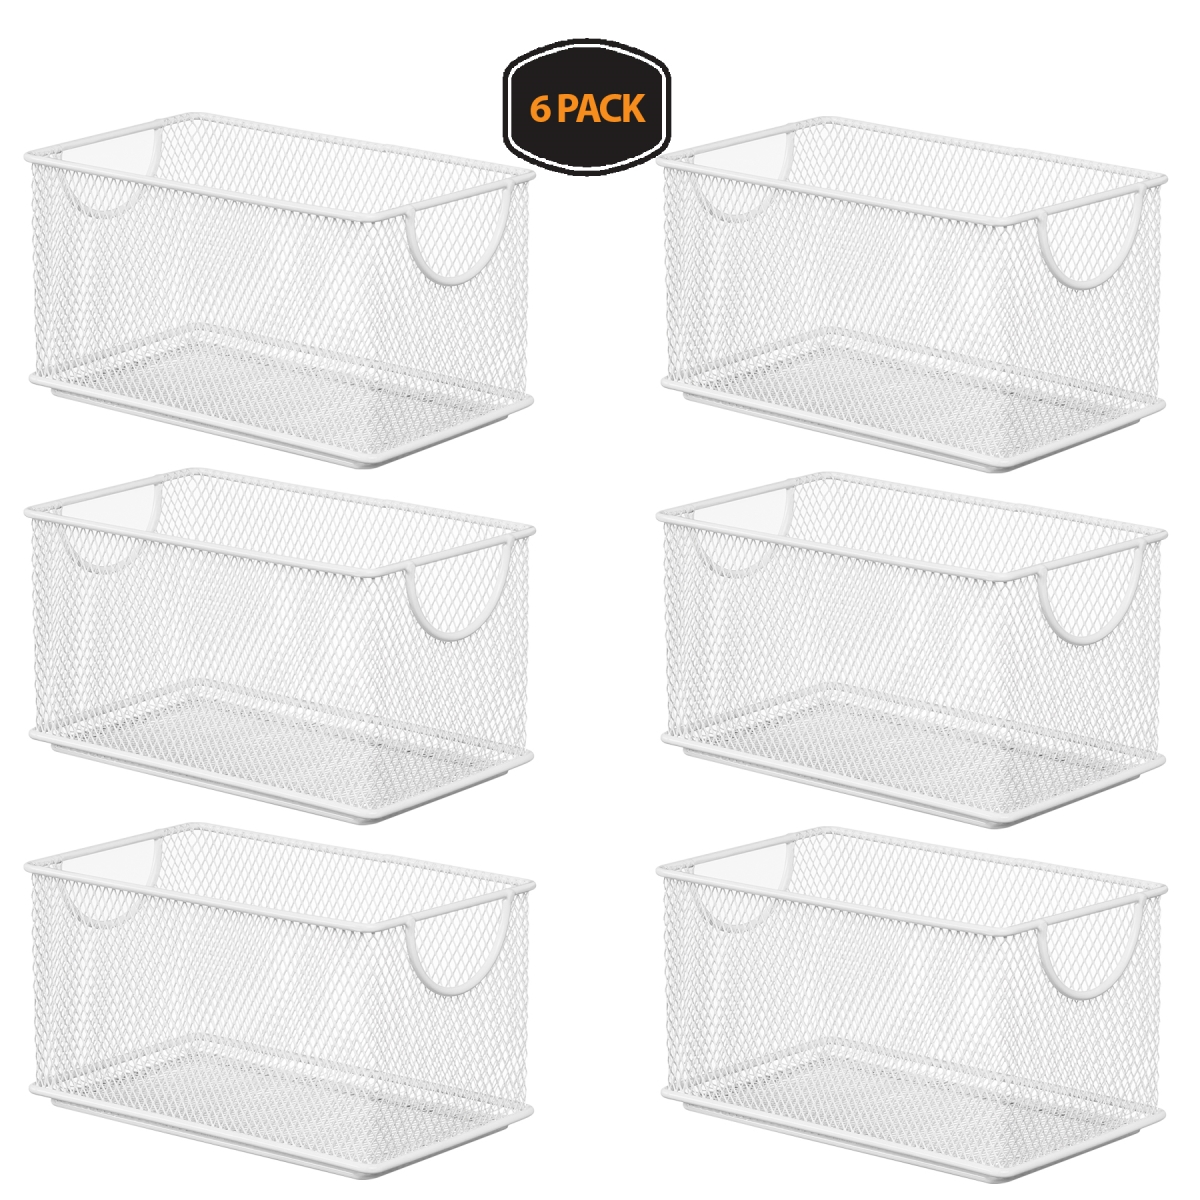 2529vc-6 Household Wire Mesh Open Bin Shelf Storage Basket With Upper Organizer, White - 4.3 X 4.3 X 7.75 In. - Pack Of 6